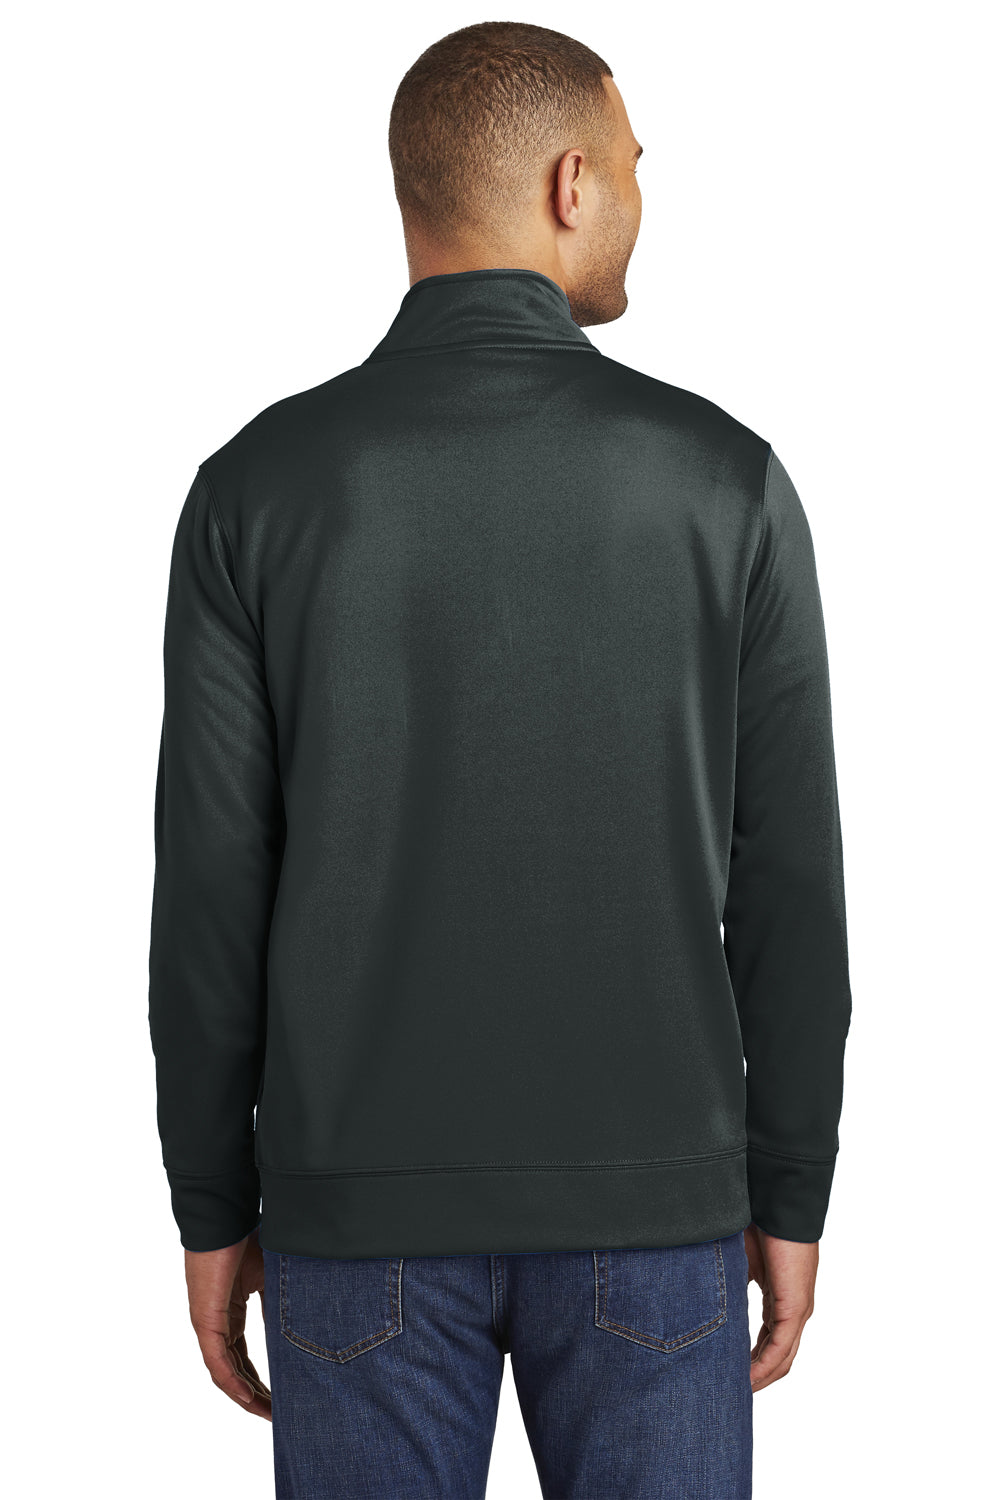 Port & Company PC590Q Mens Dry Zone Performance Moisture Wicking Fleece 1/4 Zip Sweatshirt Black Back